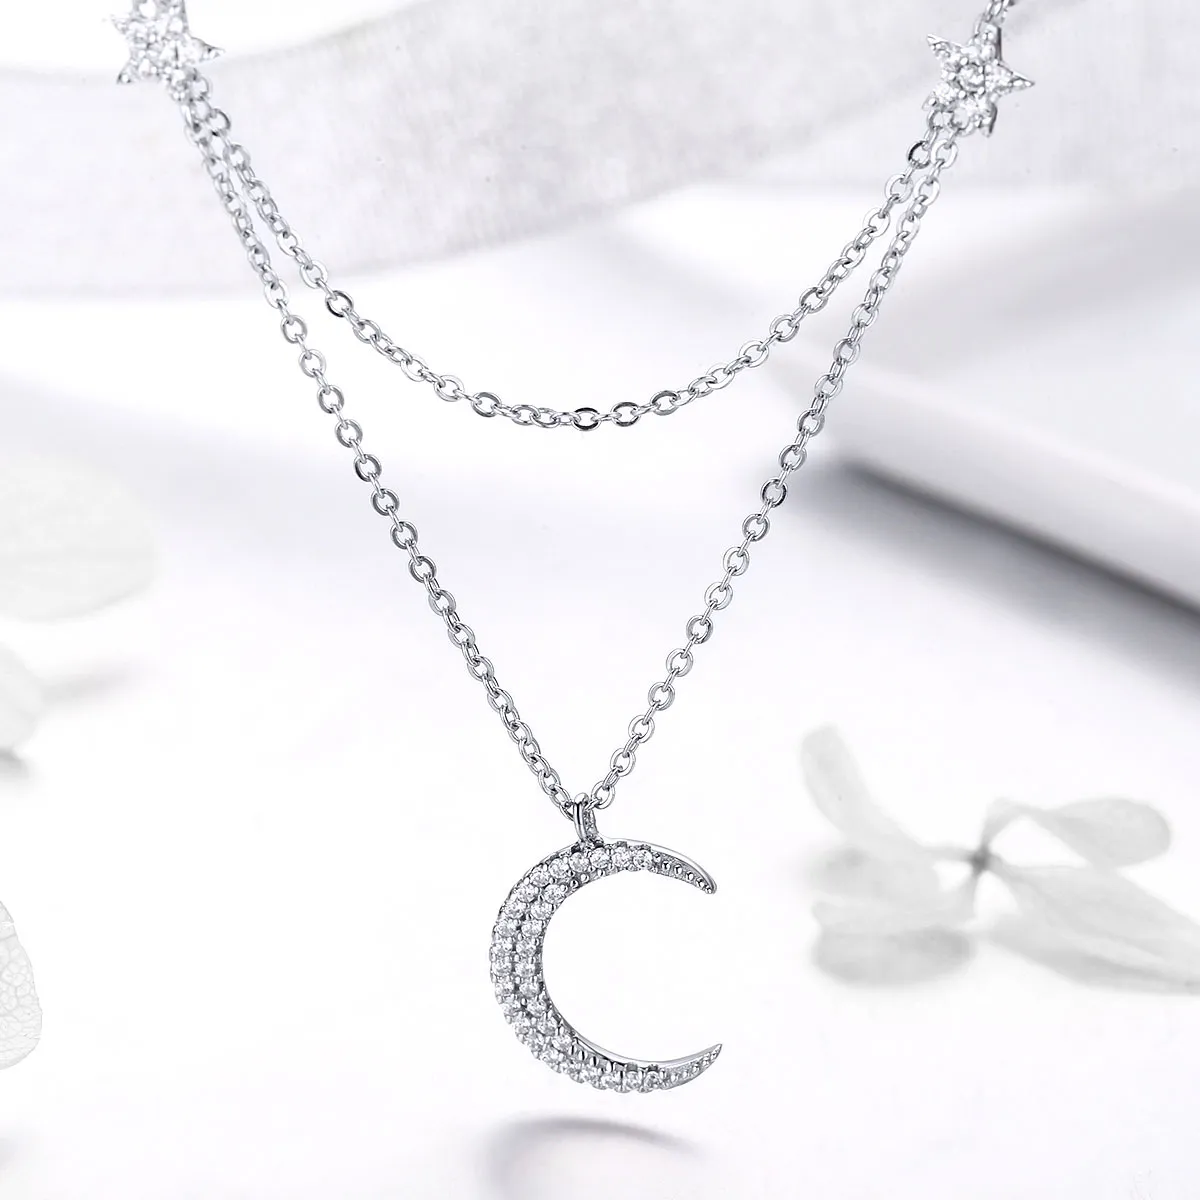 Pandora Style Silver Moon & Stars Pendant Necklace - BSN038